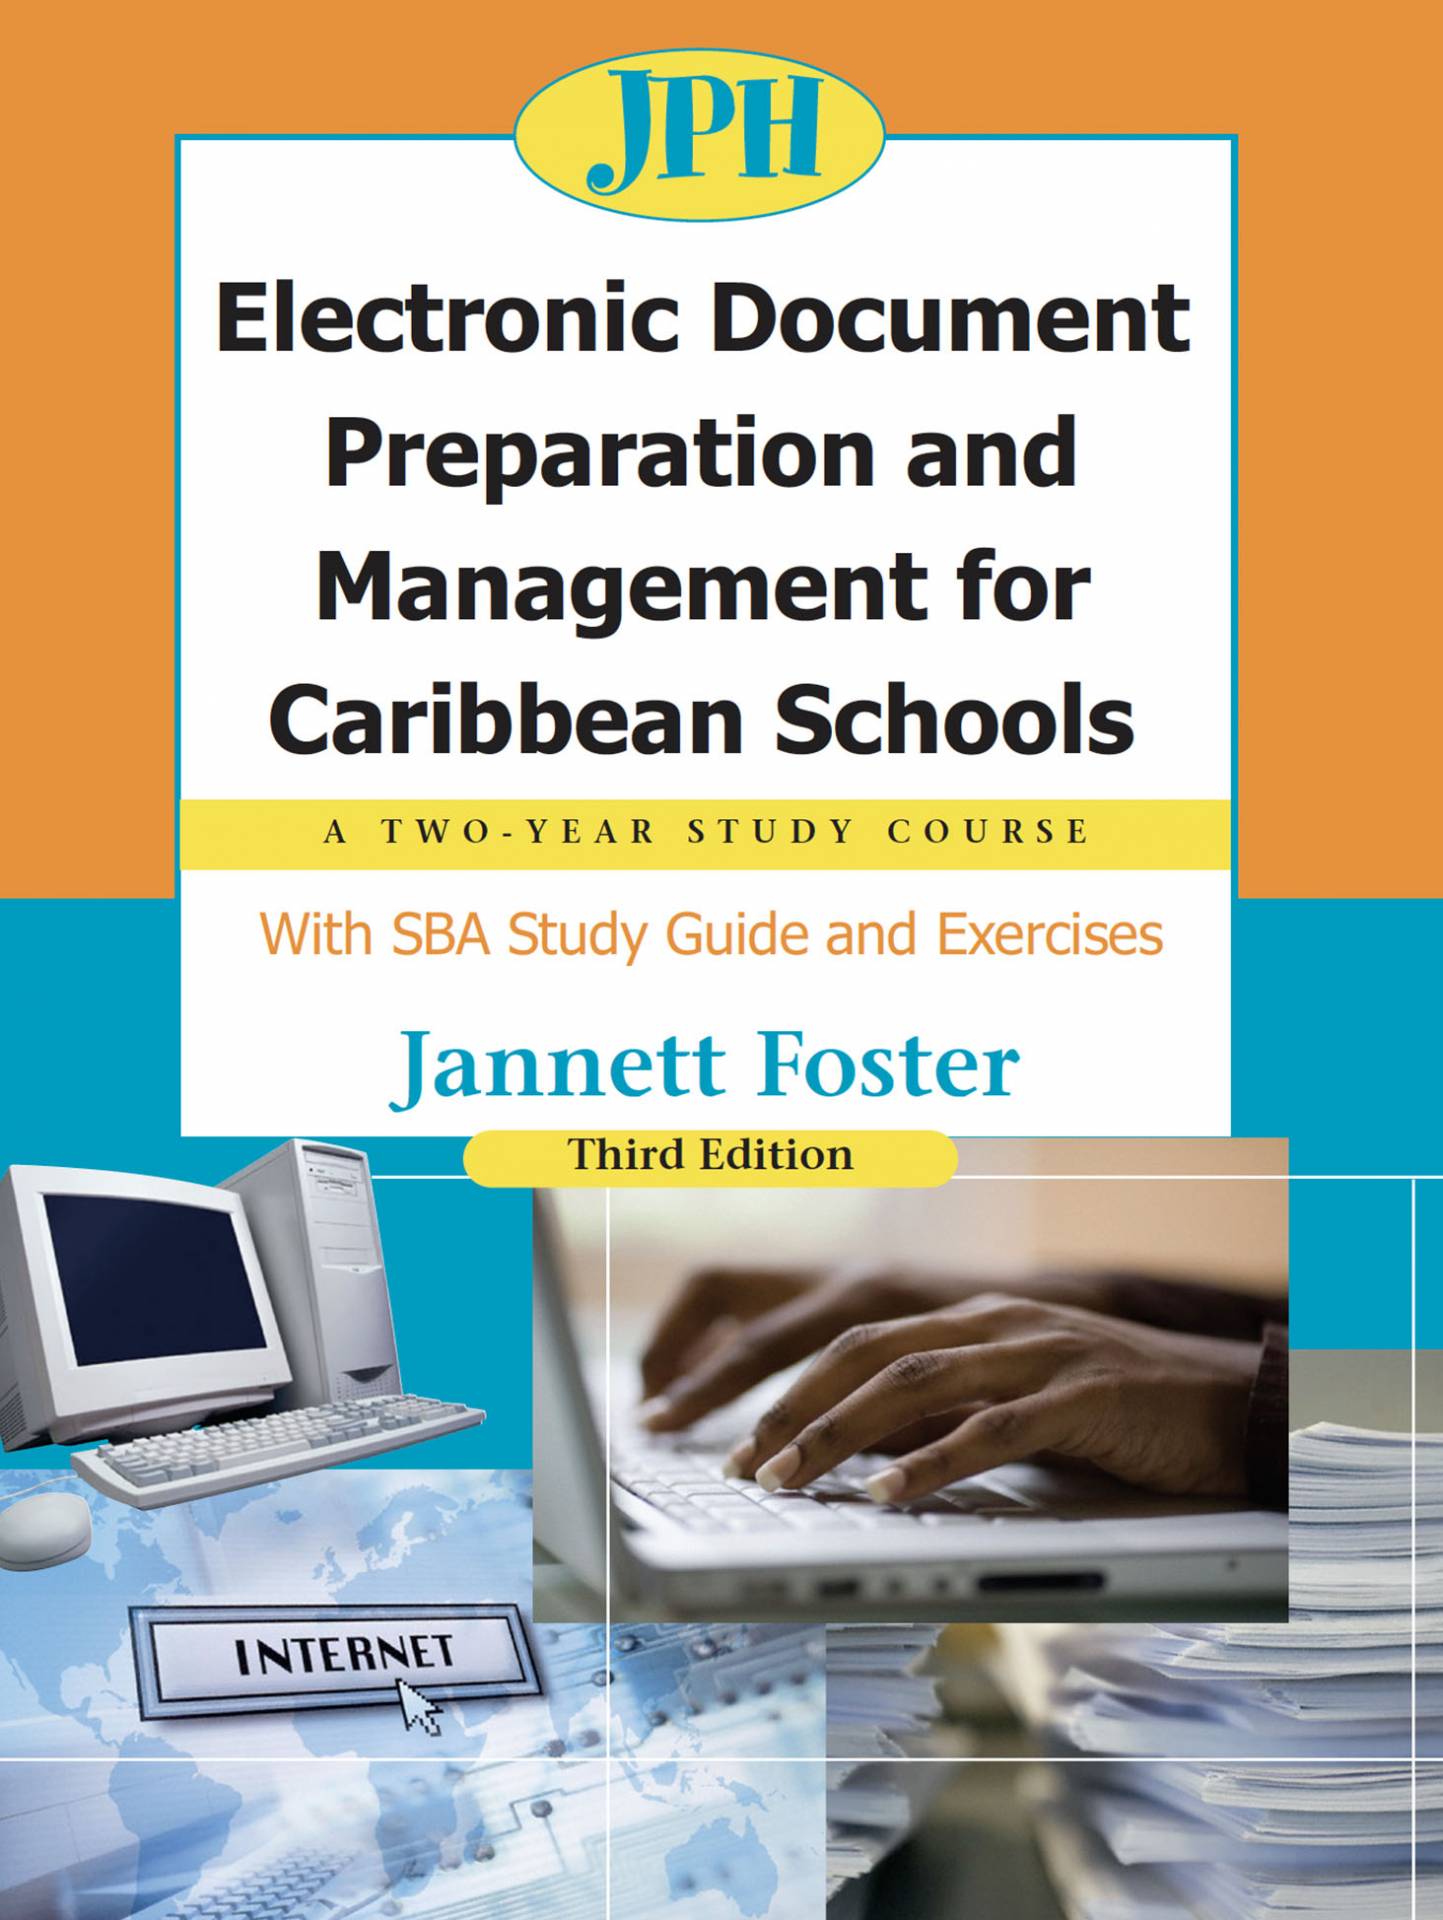 JPH Electronic Document Management & Preparation for Caribbean Schools